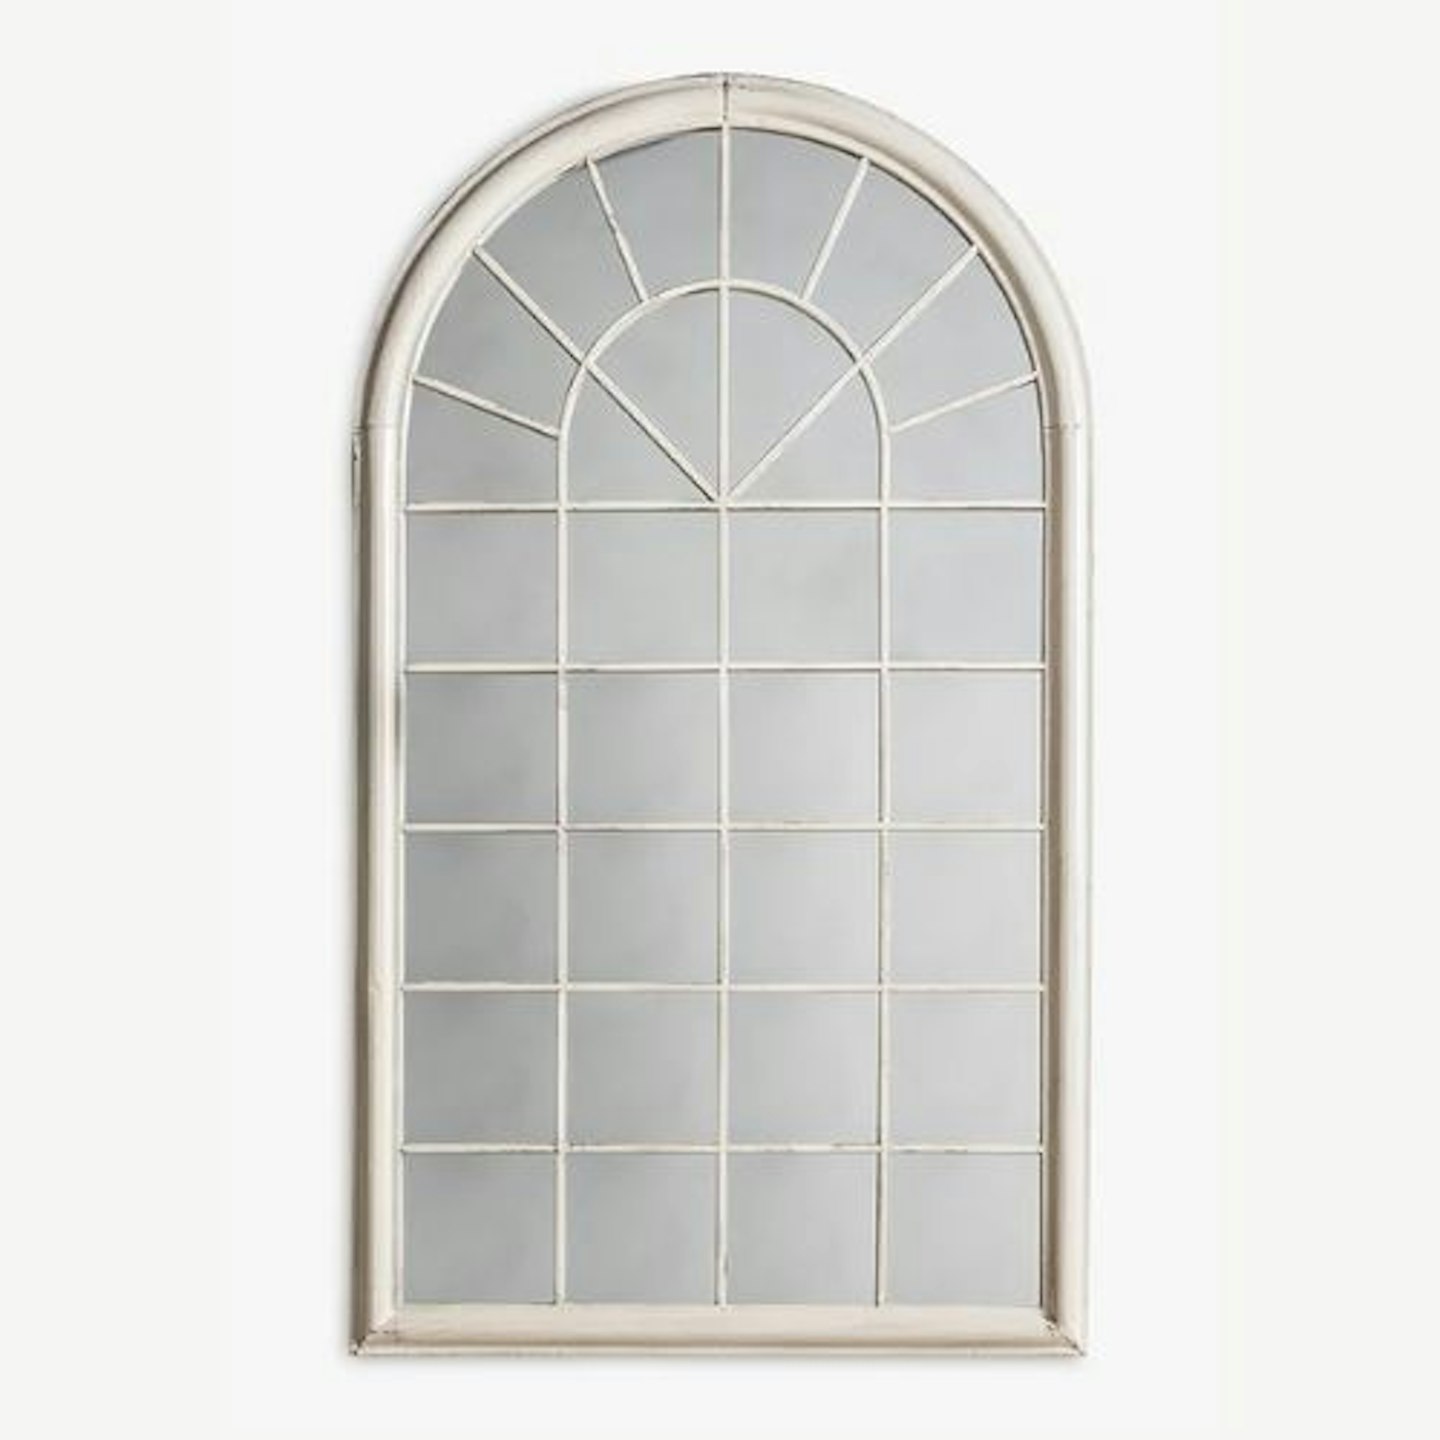 Gallery Direct Fura Outdoor Garden Wall Window Style Arched Mirror, 131 x 75cm, Antique Cream